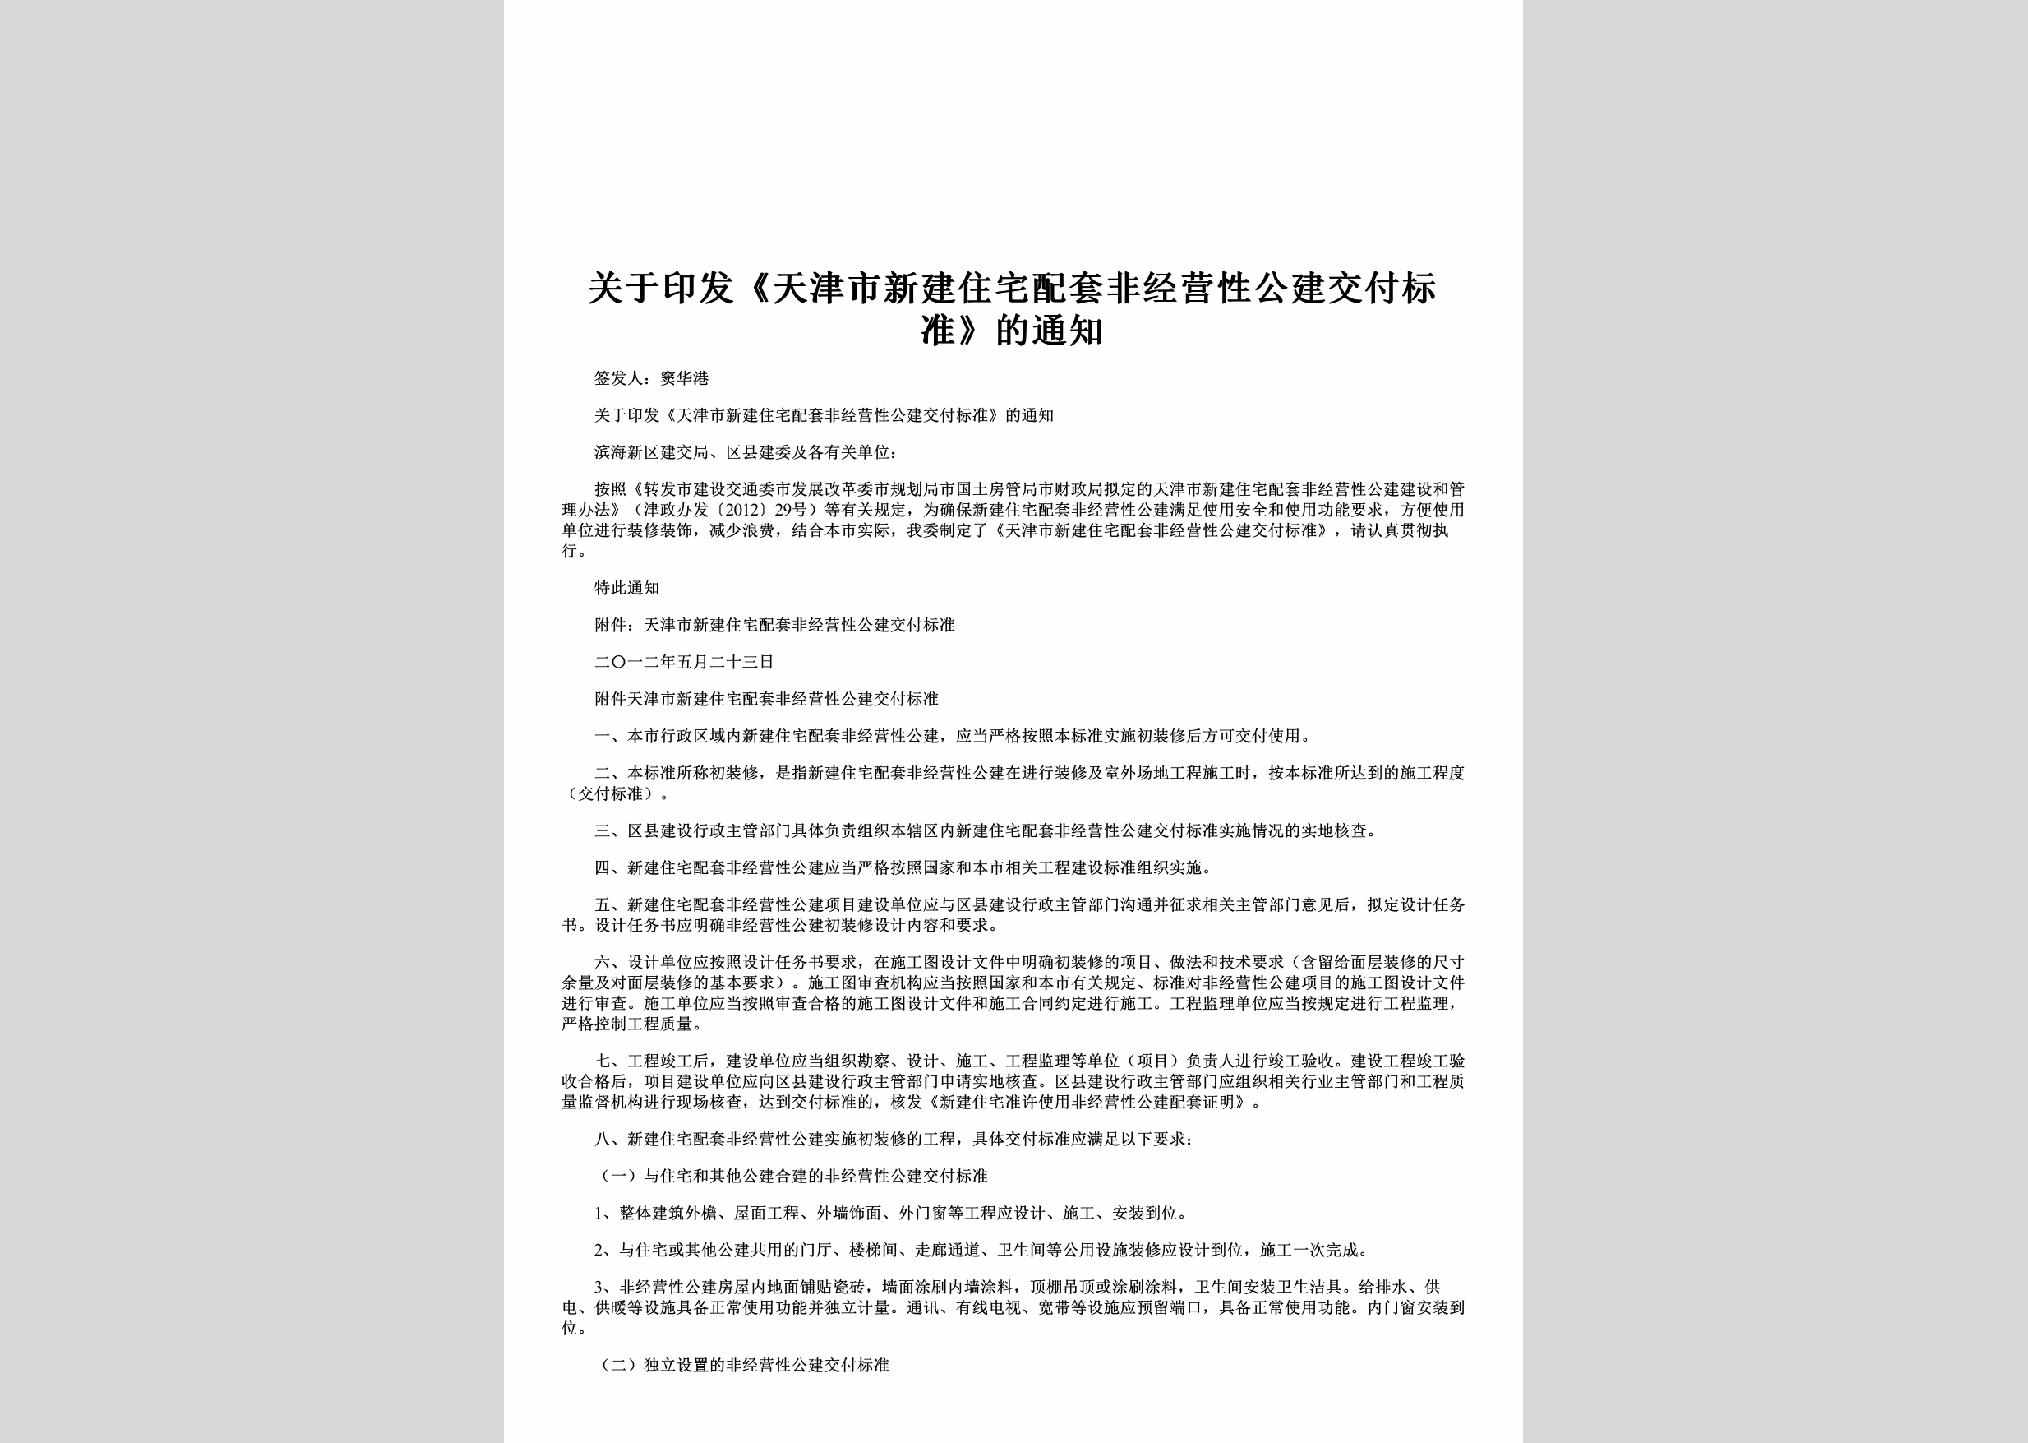 TJ-GYTJSXZZ-2012：关于印发《天津市新建住宅配套非经营性公建交付标准》的通知